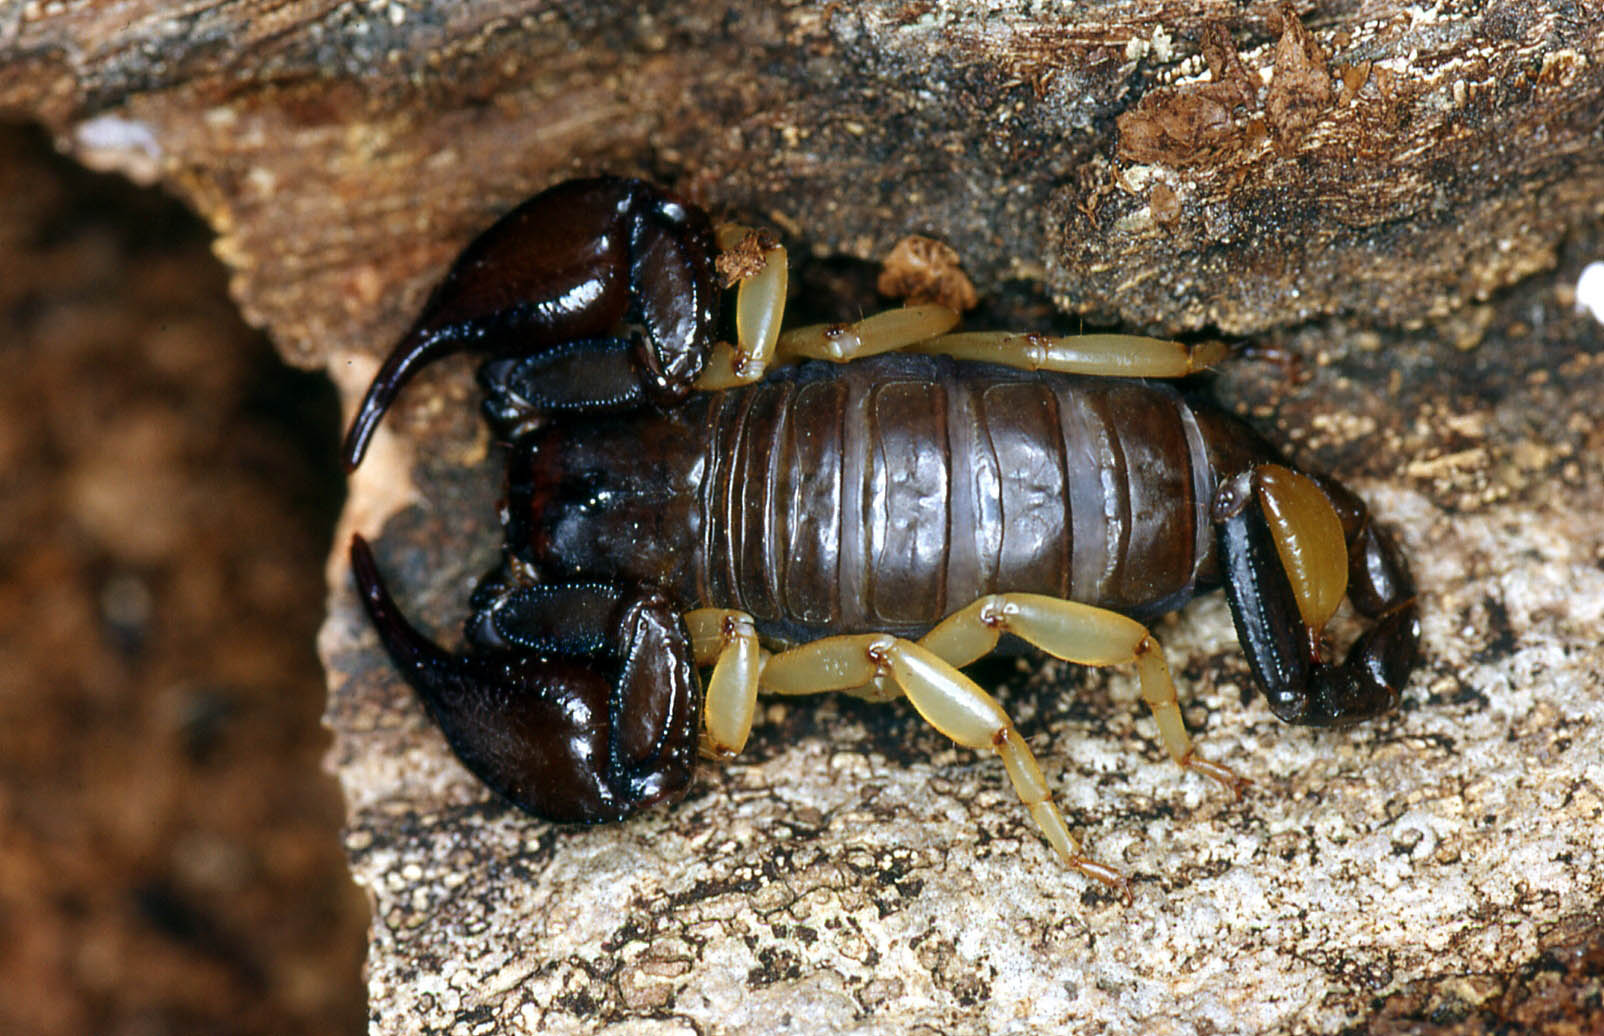 The Scorpion Files - European Scorpions